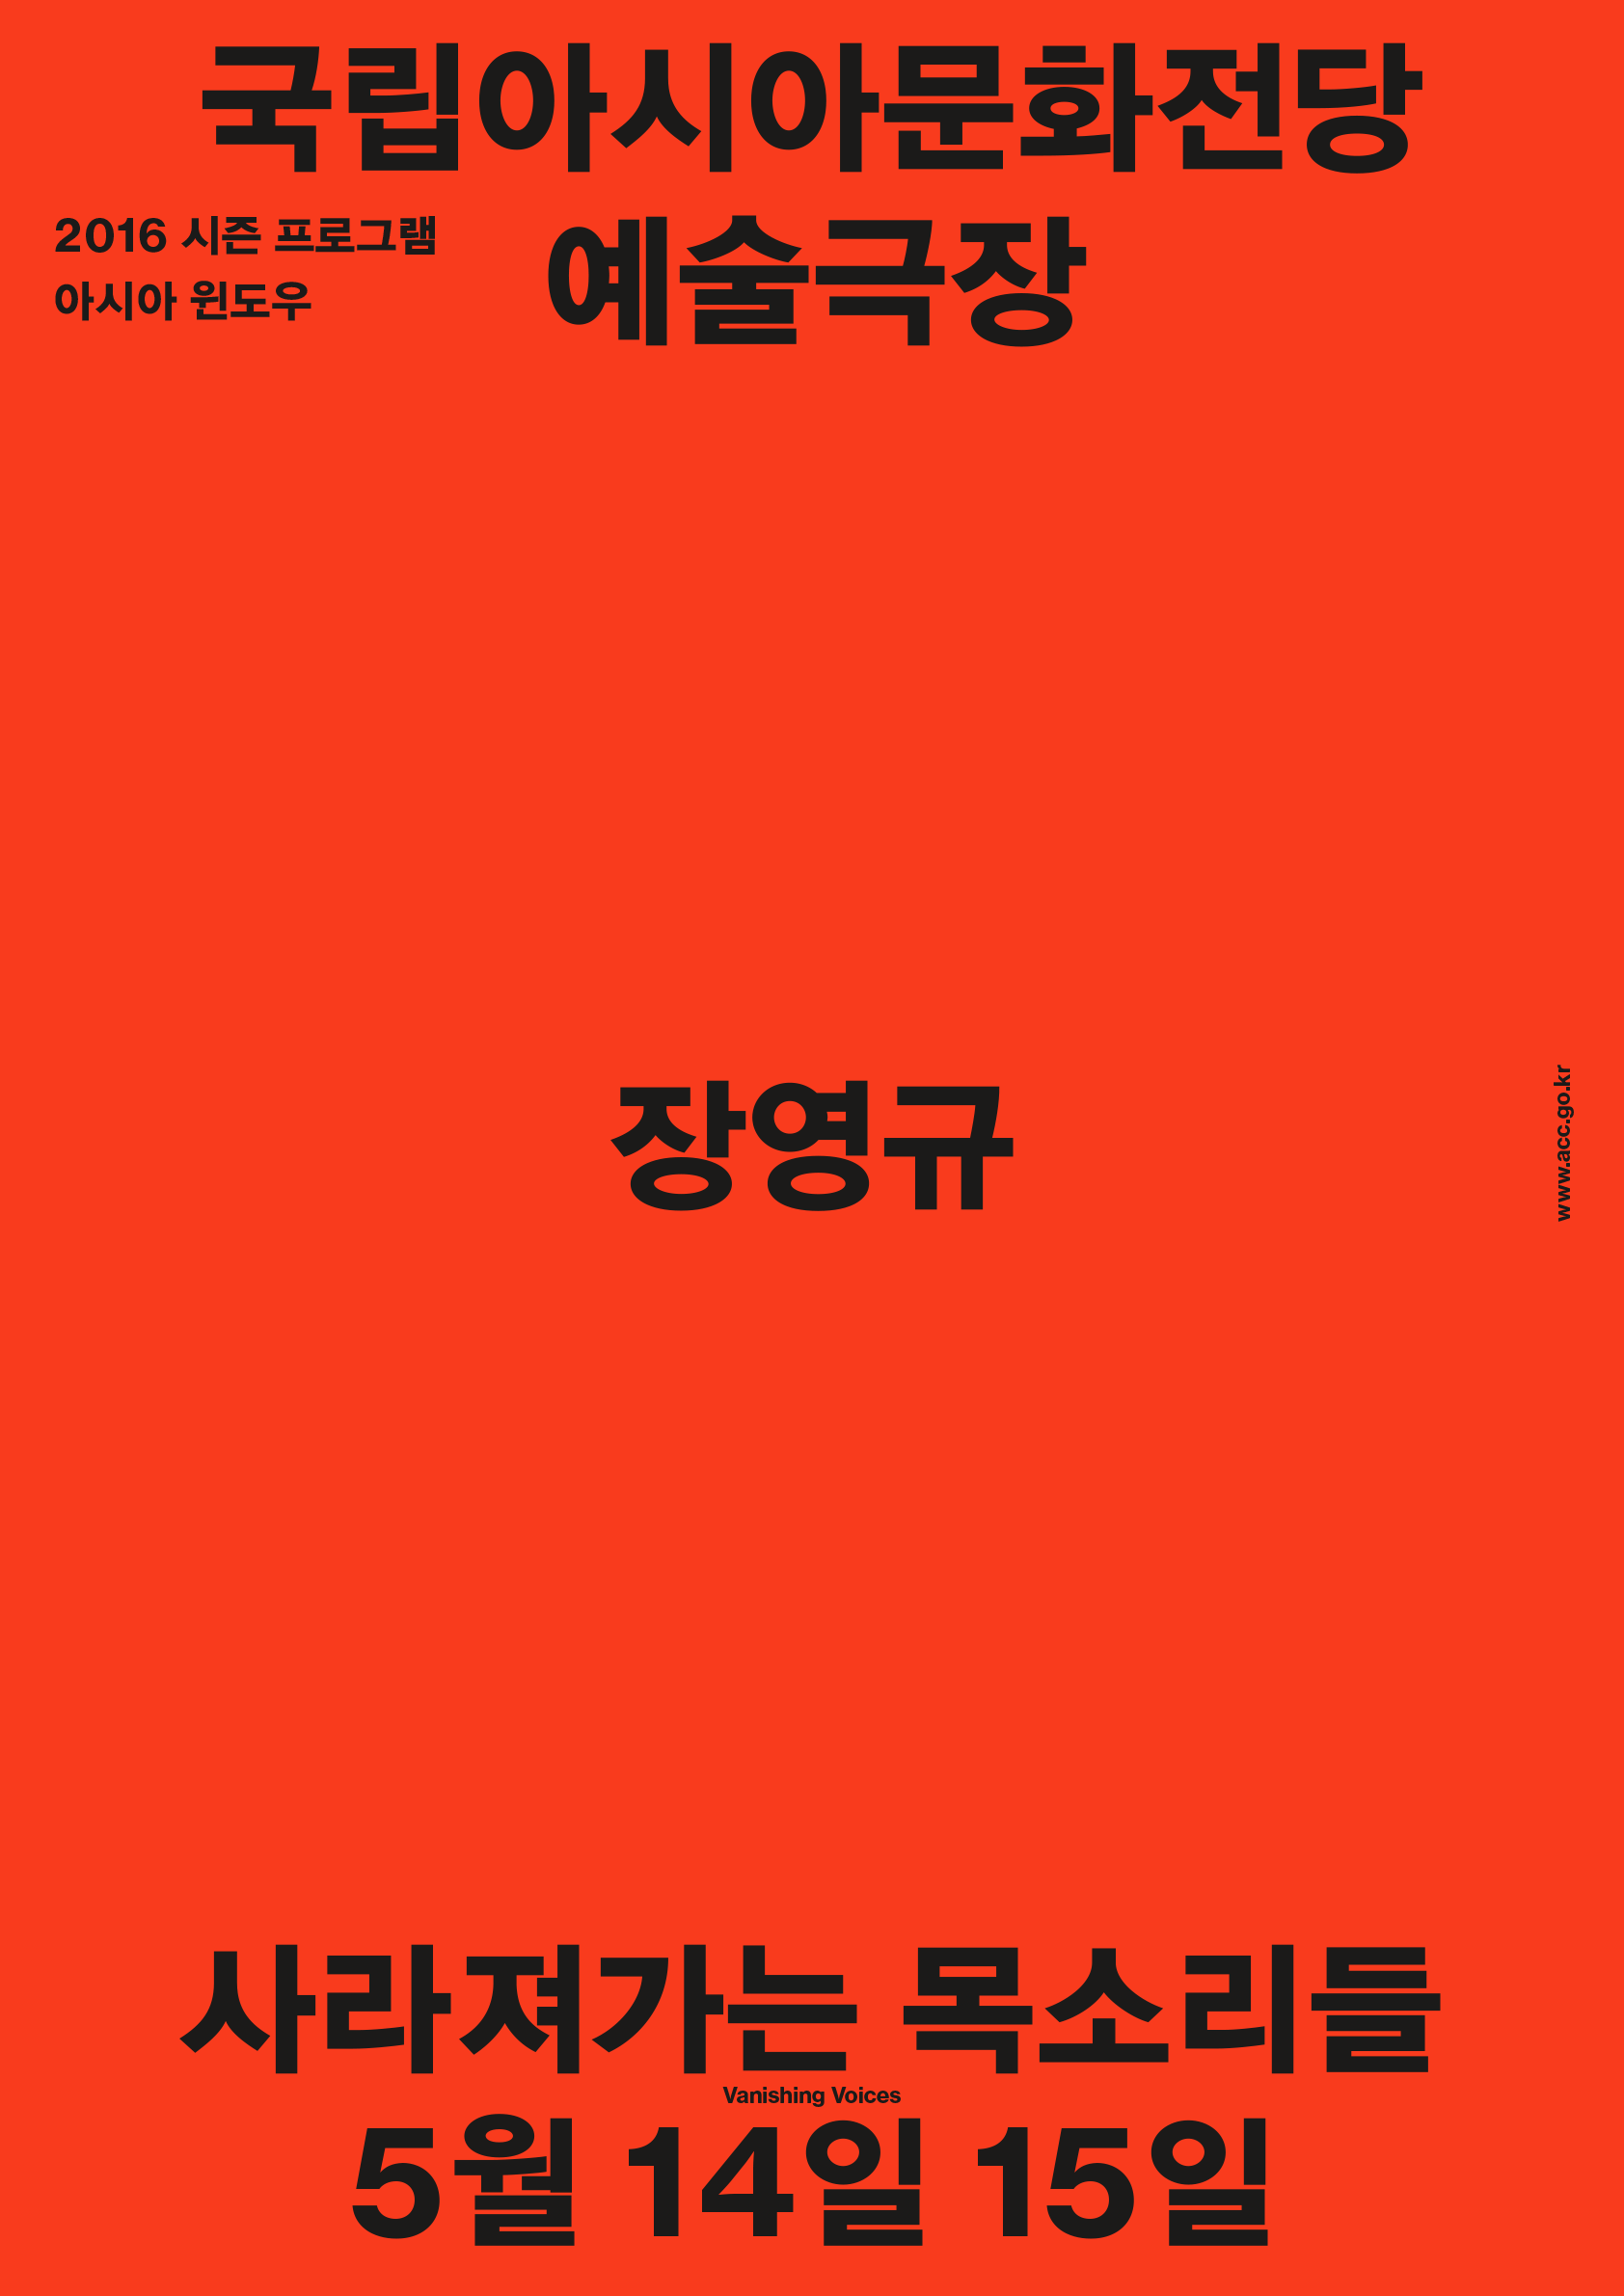 ACCT_Jang-Young-gyu_poster-1